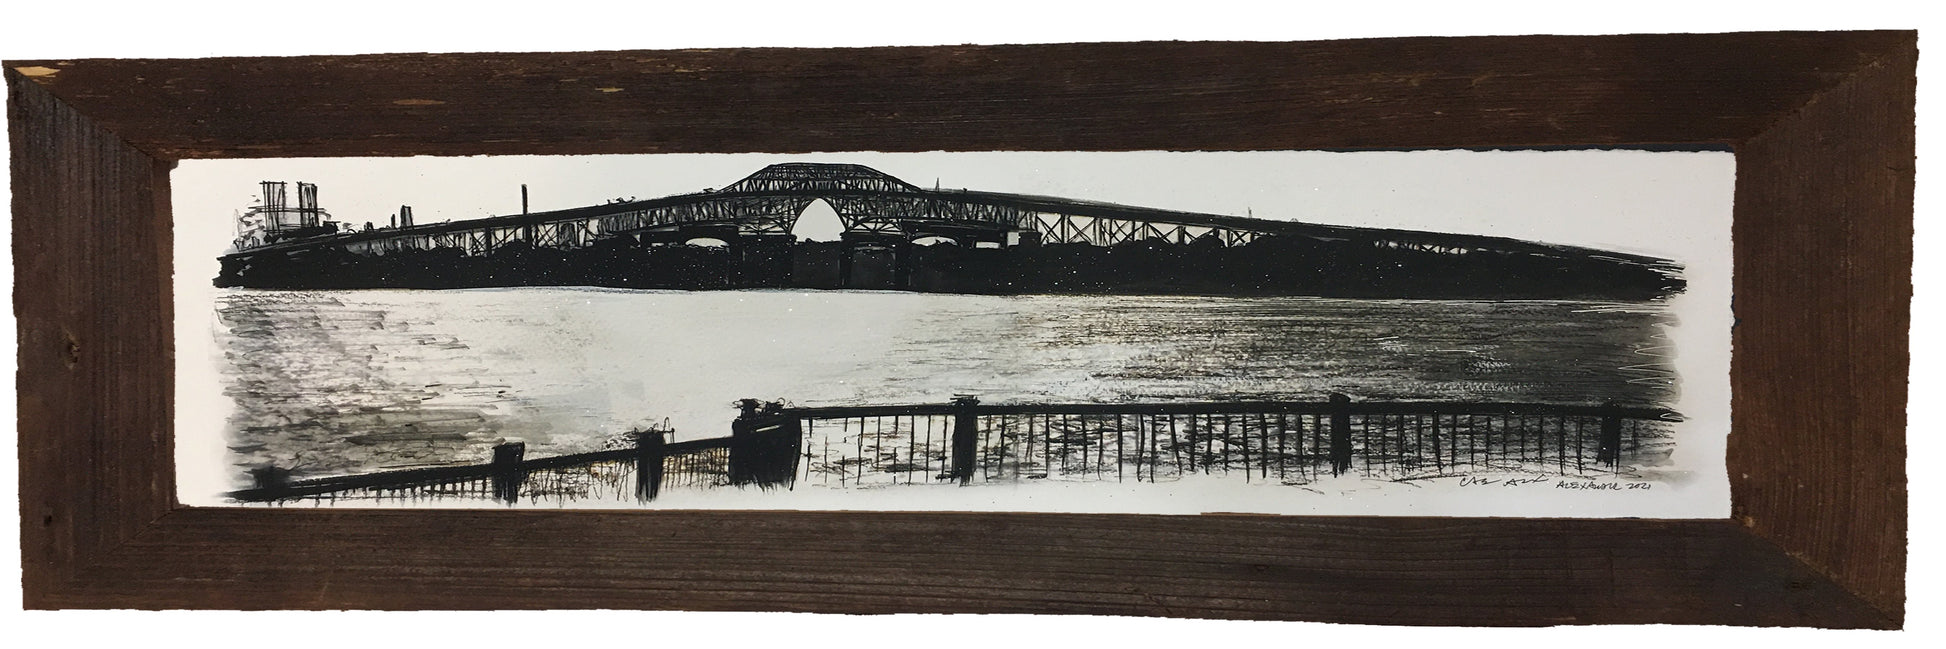 Candice Alexander, Alexander Art, Louisiana, Southwest Louisiana, Lake Charles, I-10 Bridge, Black & White